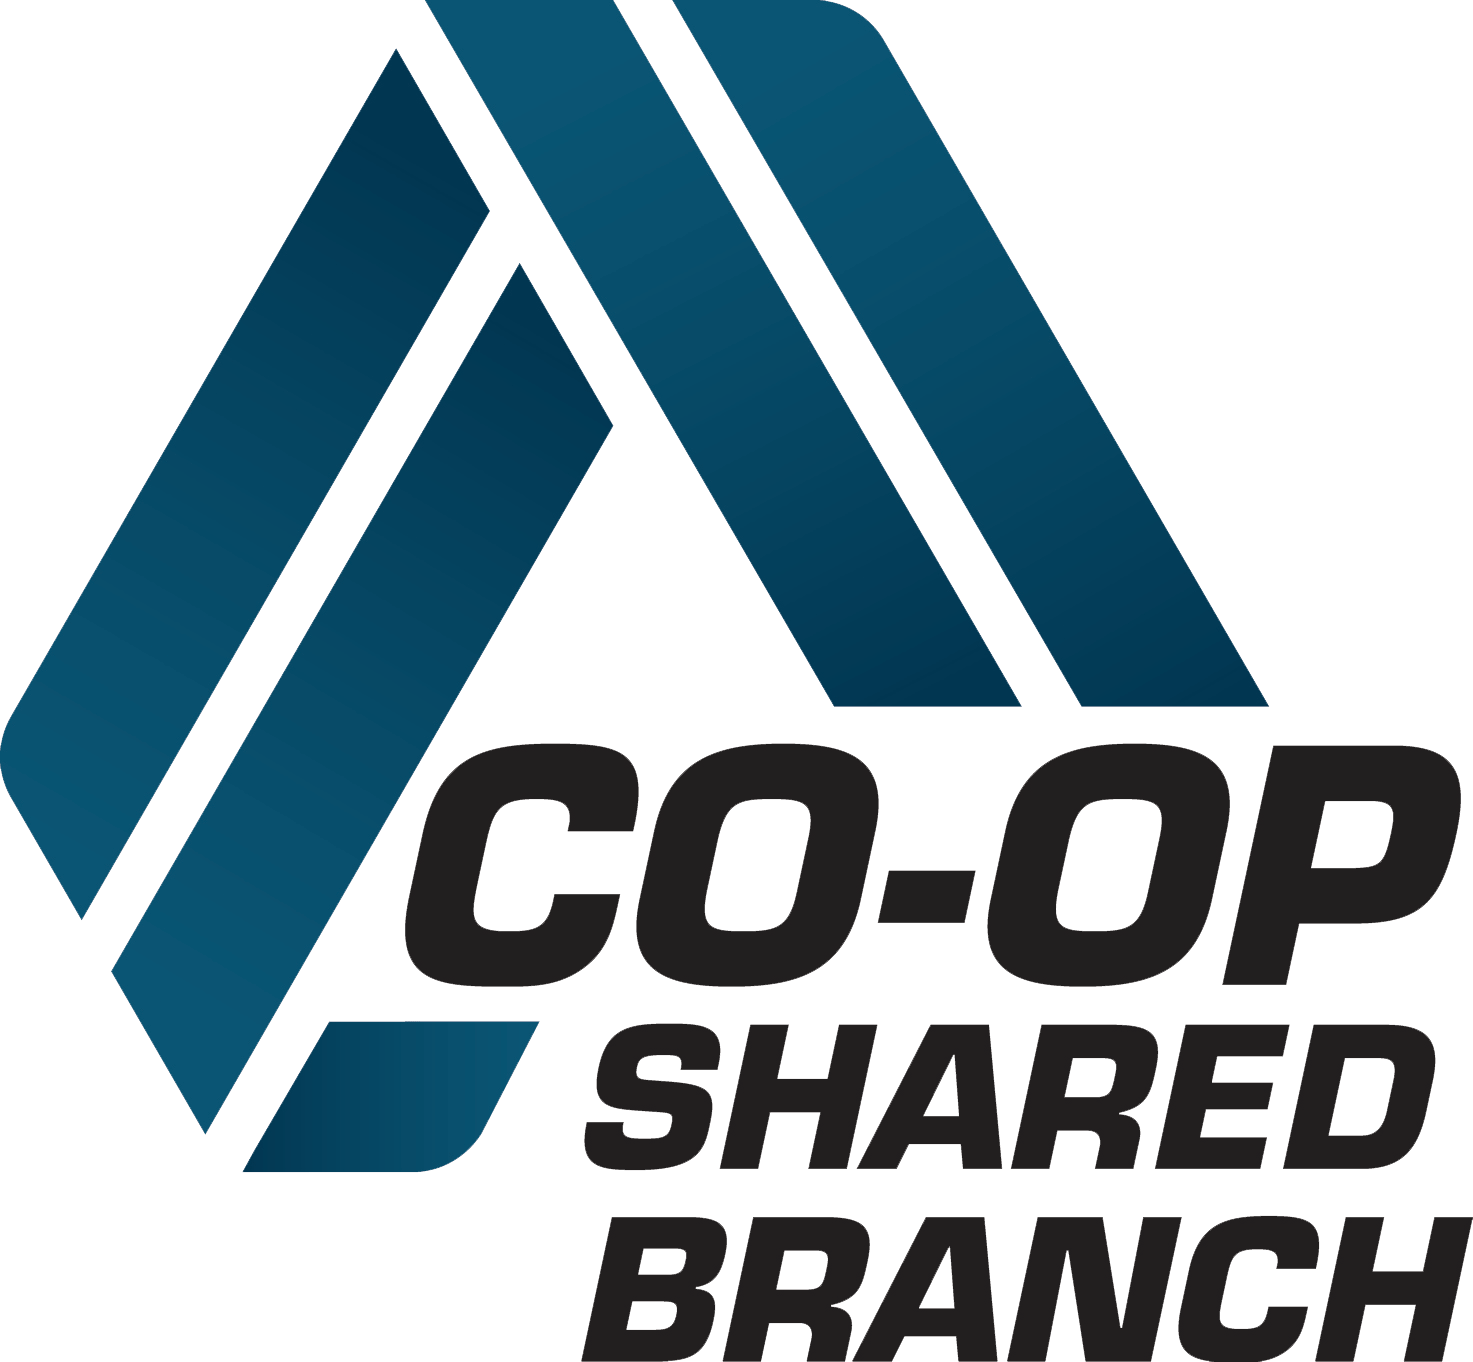 Shared Branch logo